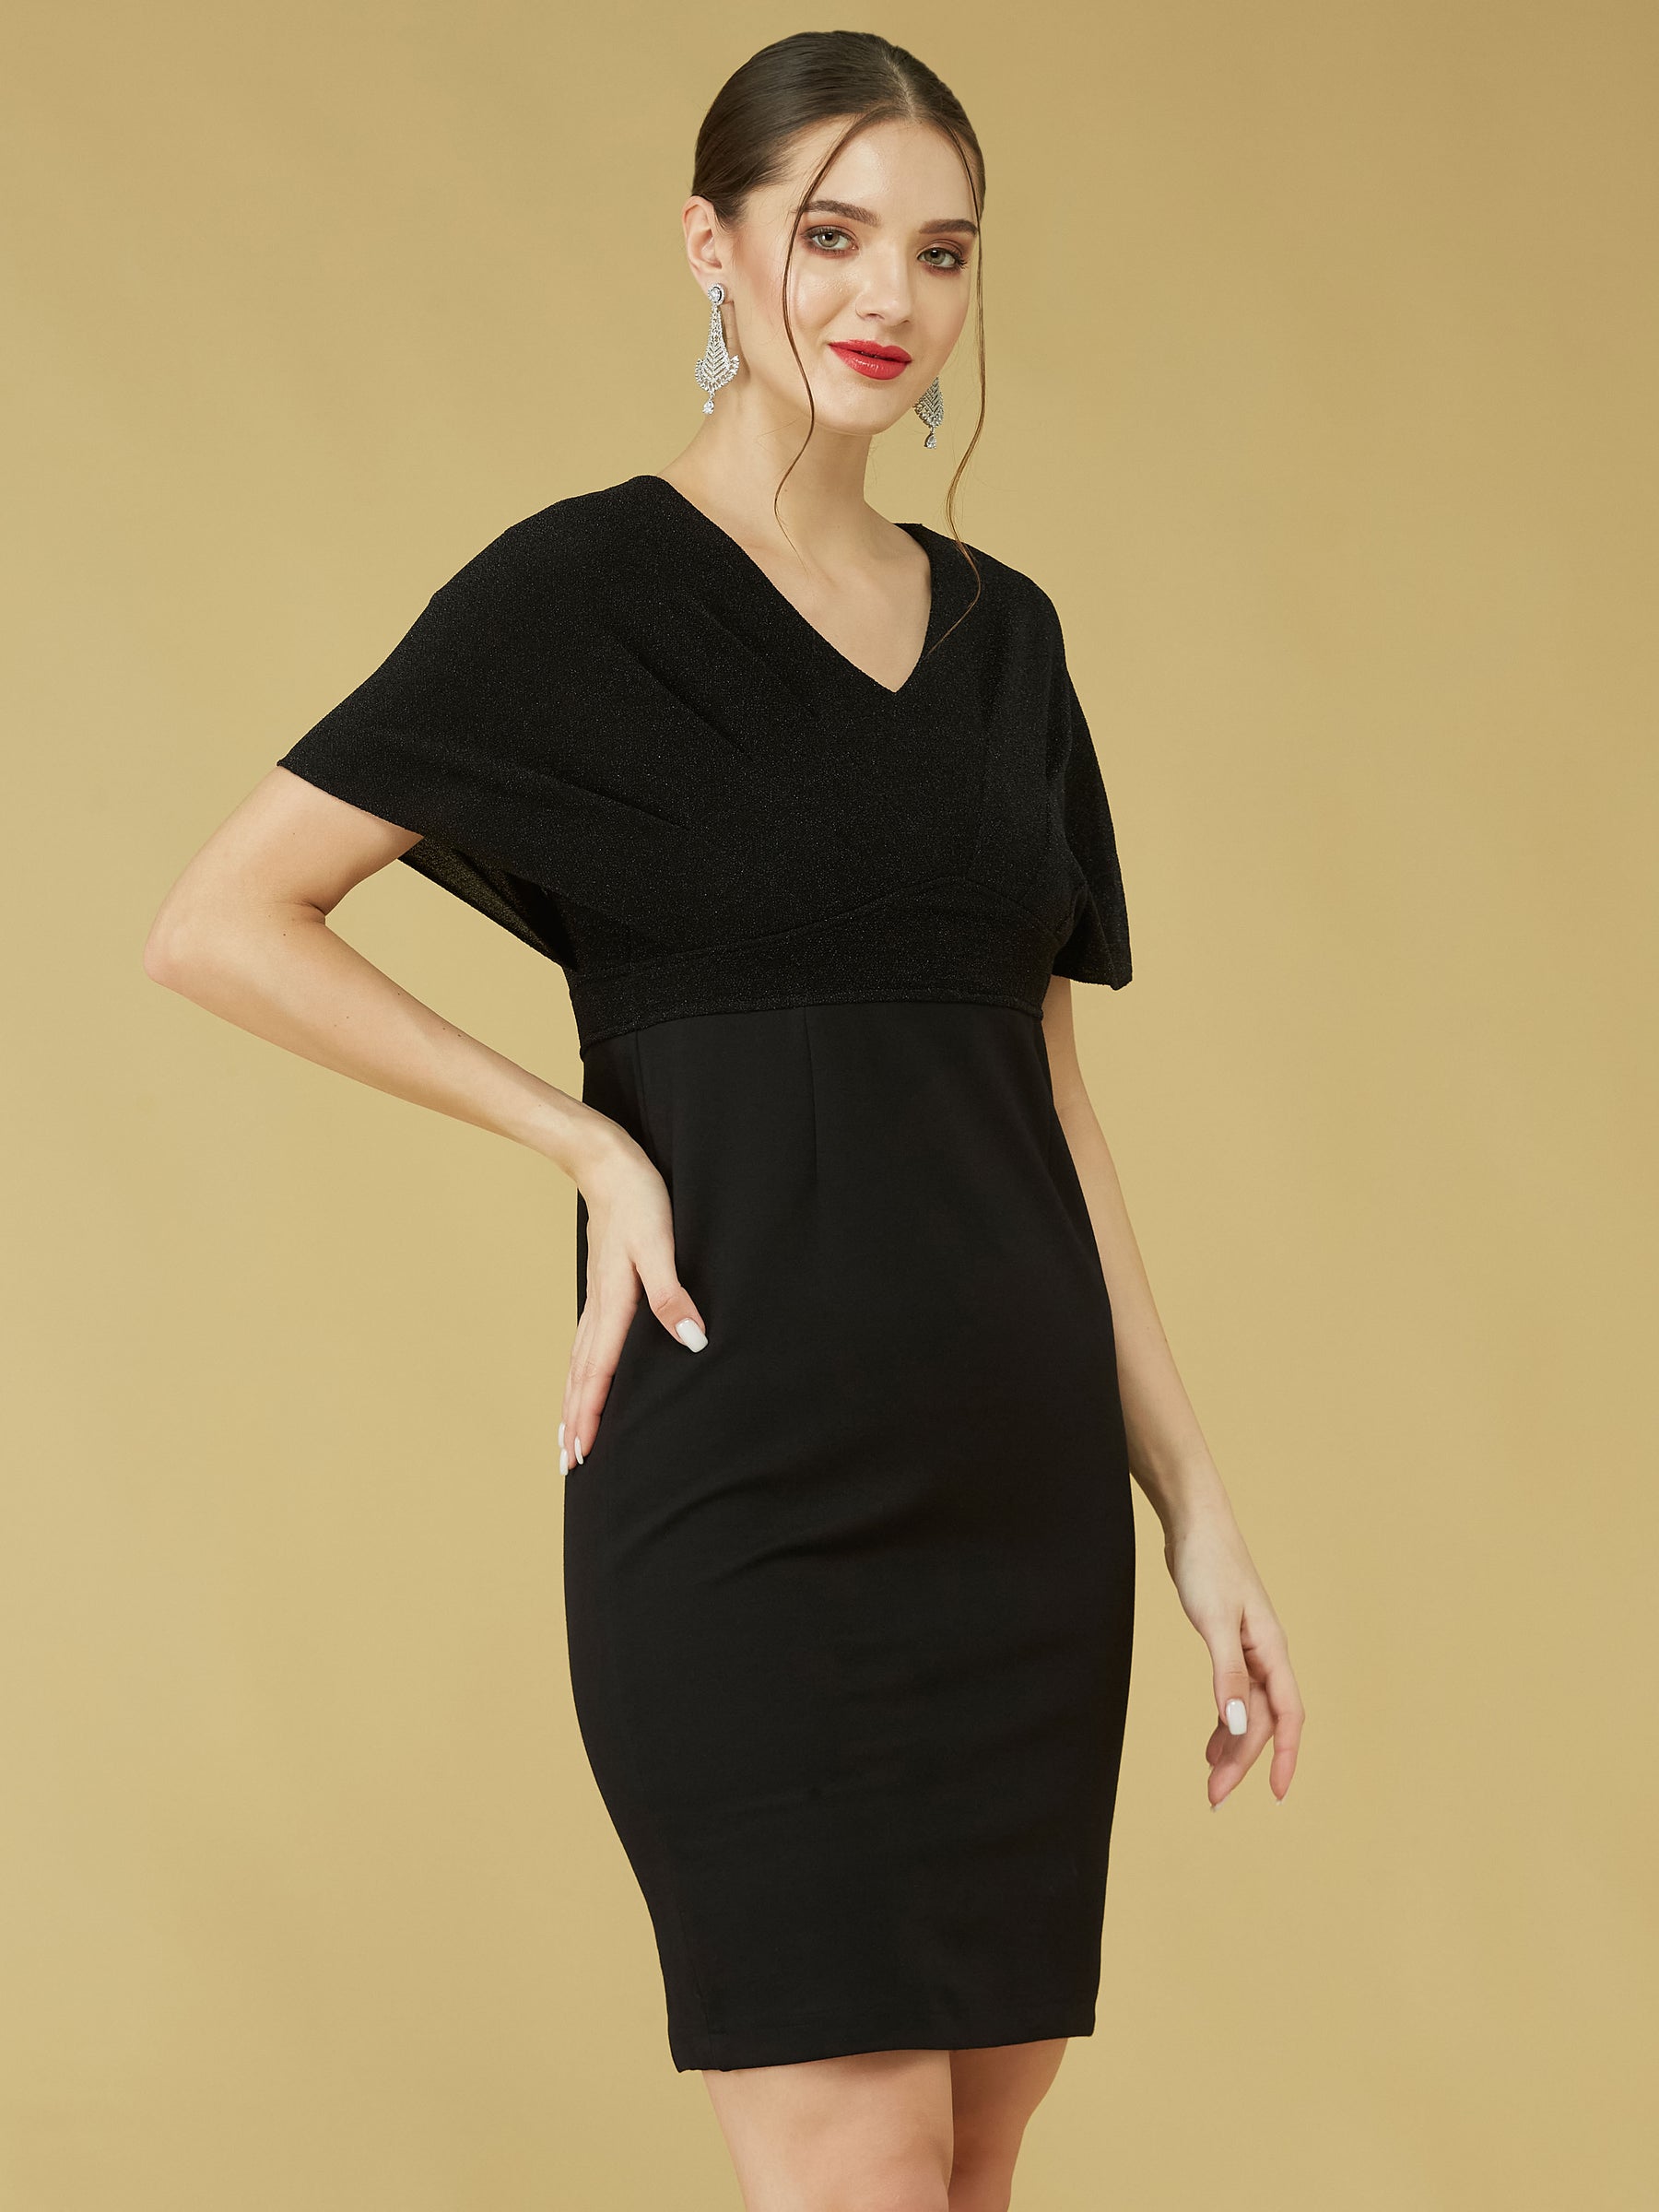 Black HalfSleeve Solid Dress